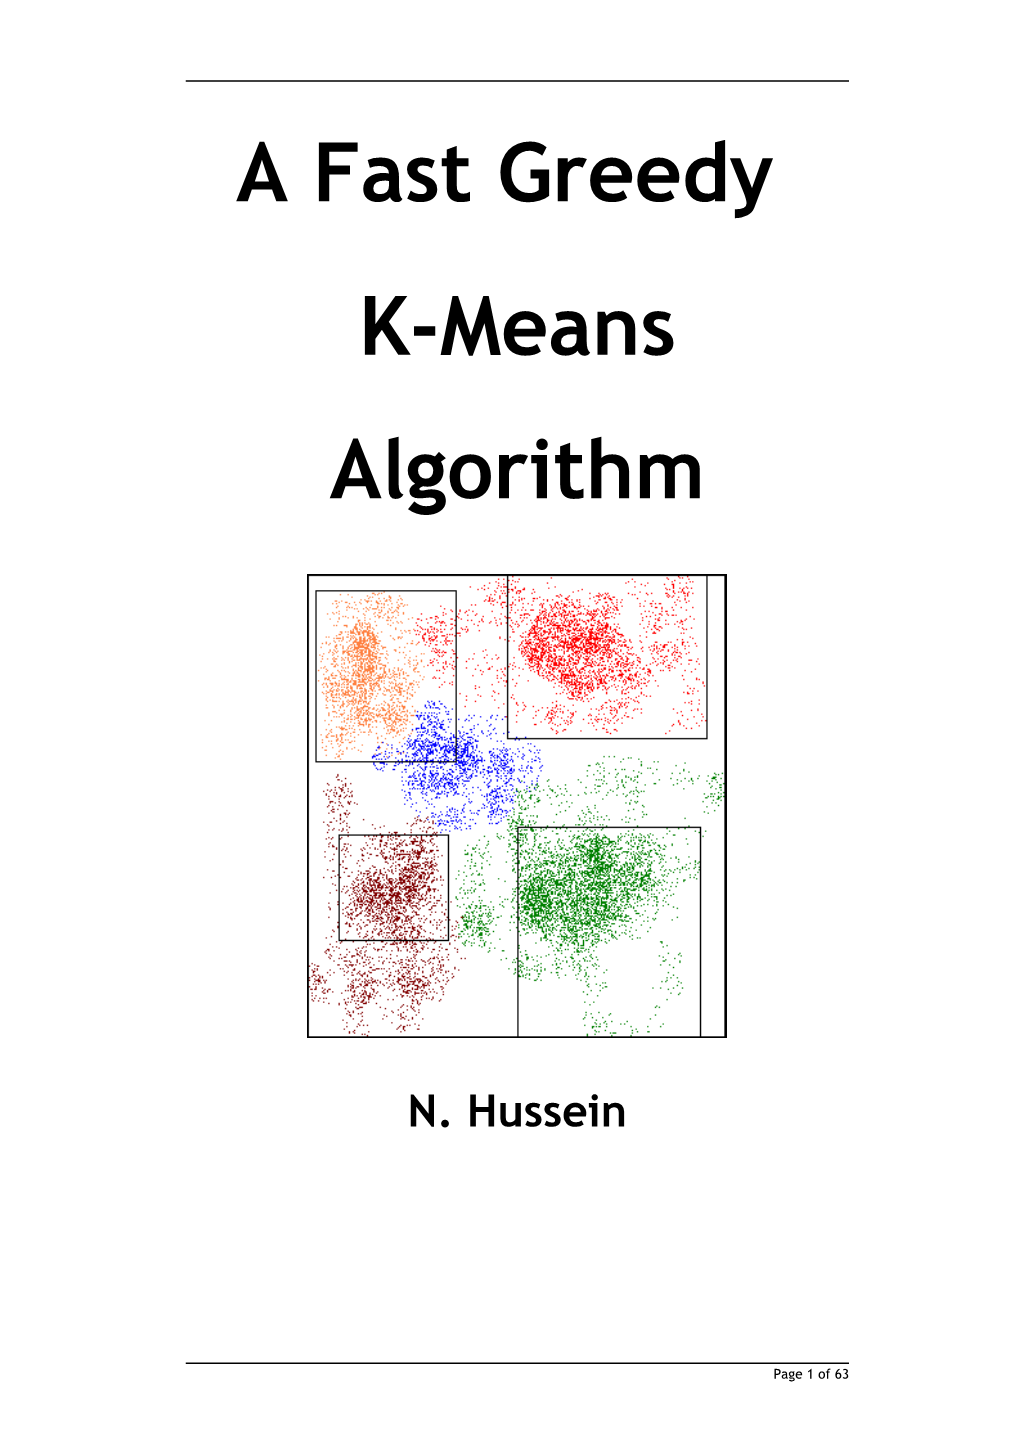 A Fast Global K-Means Algorithm